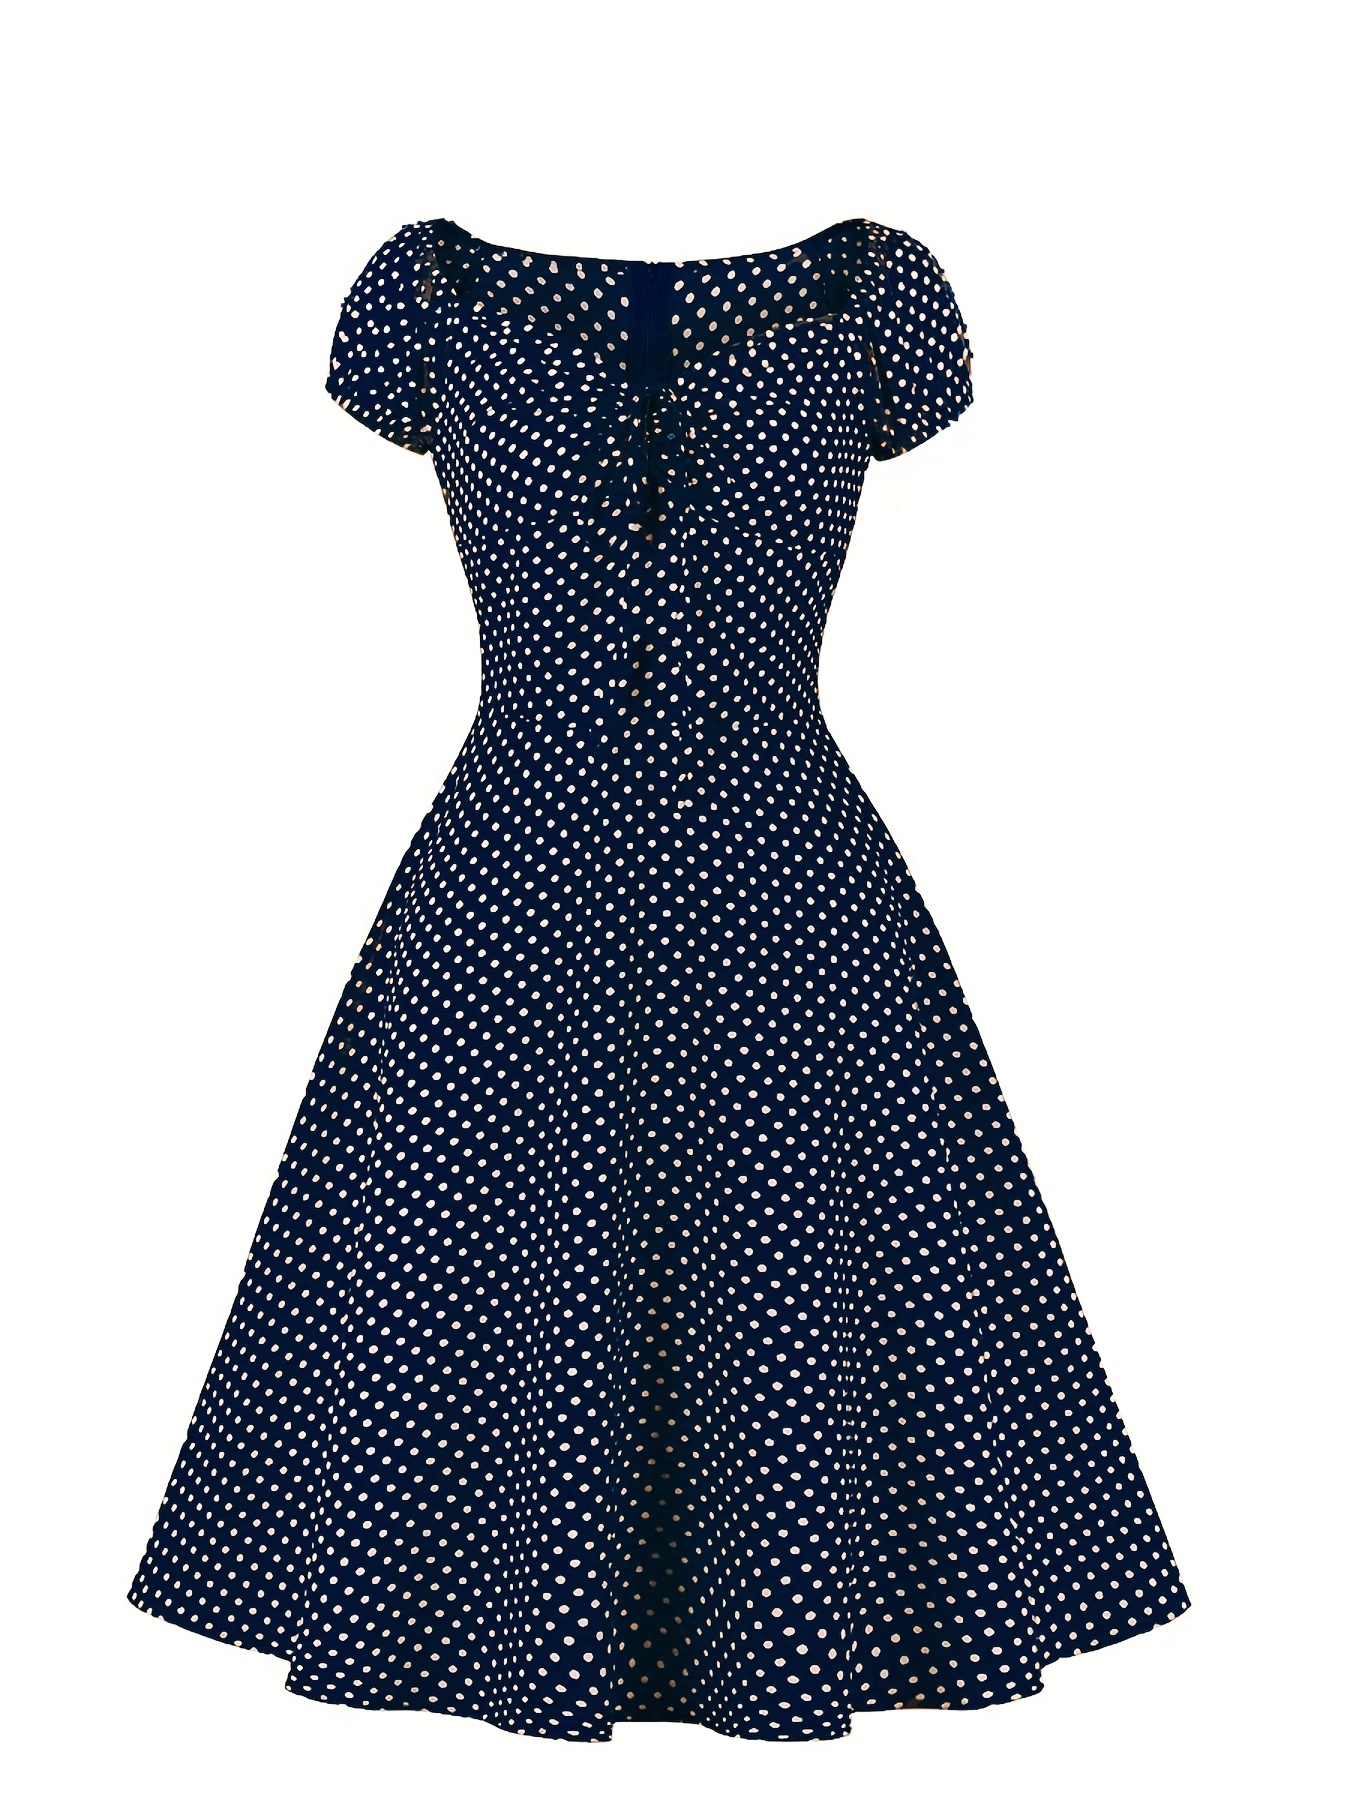 Ladies Dress Size 10 Women's Vintage Dress 1950s Retro Sleeveless